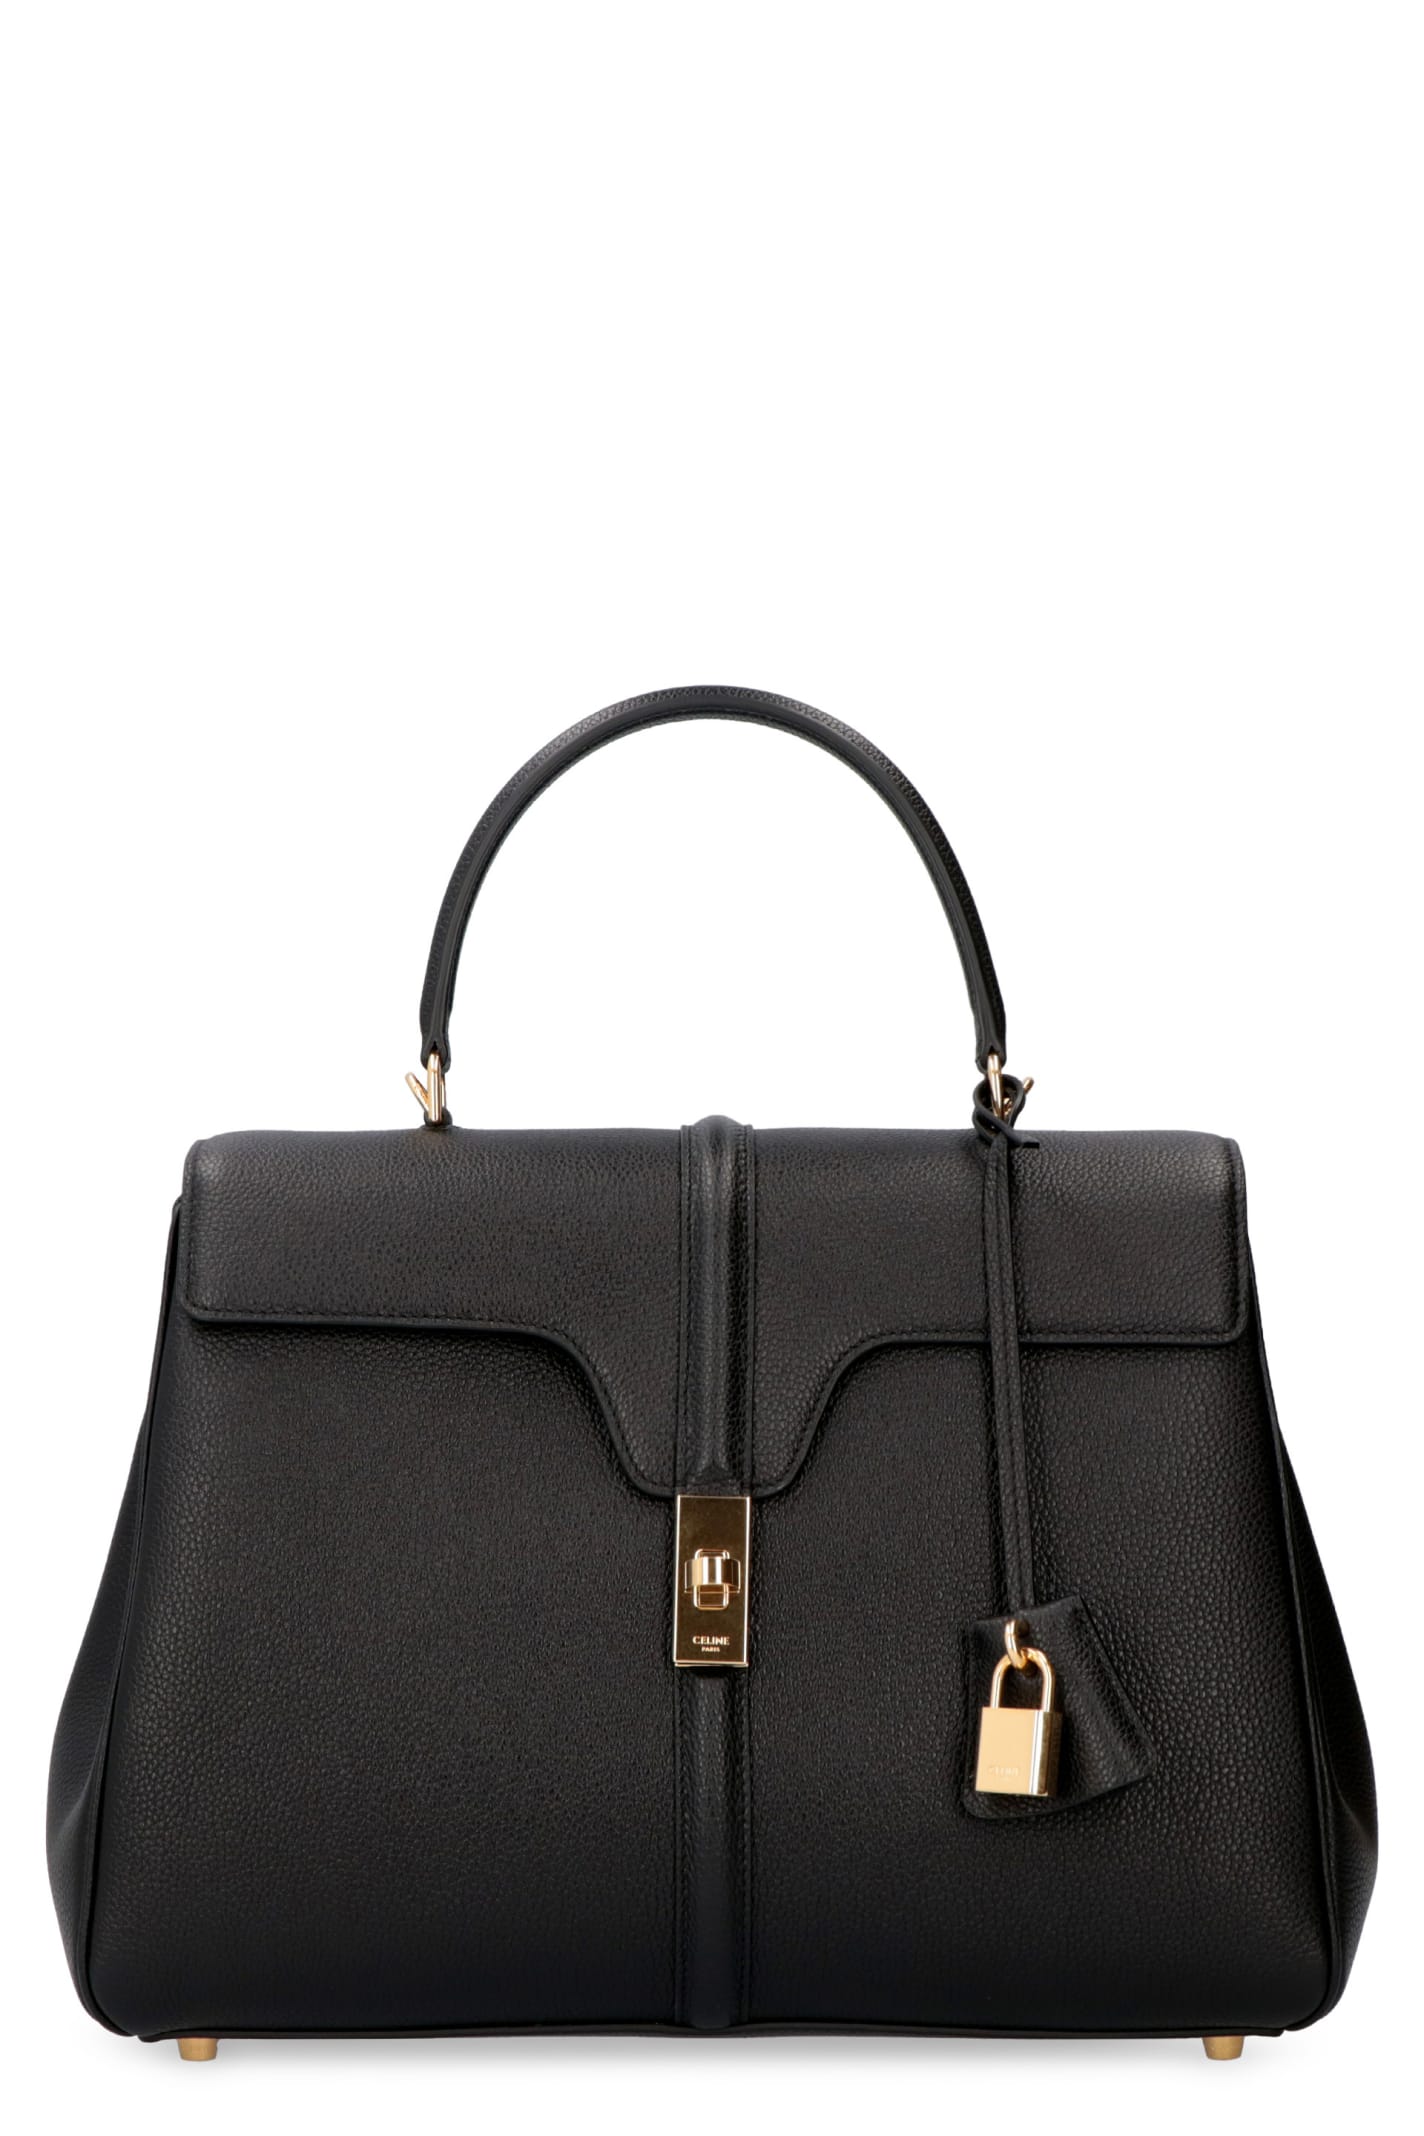 Celine 16 Leather Handbag